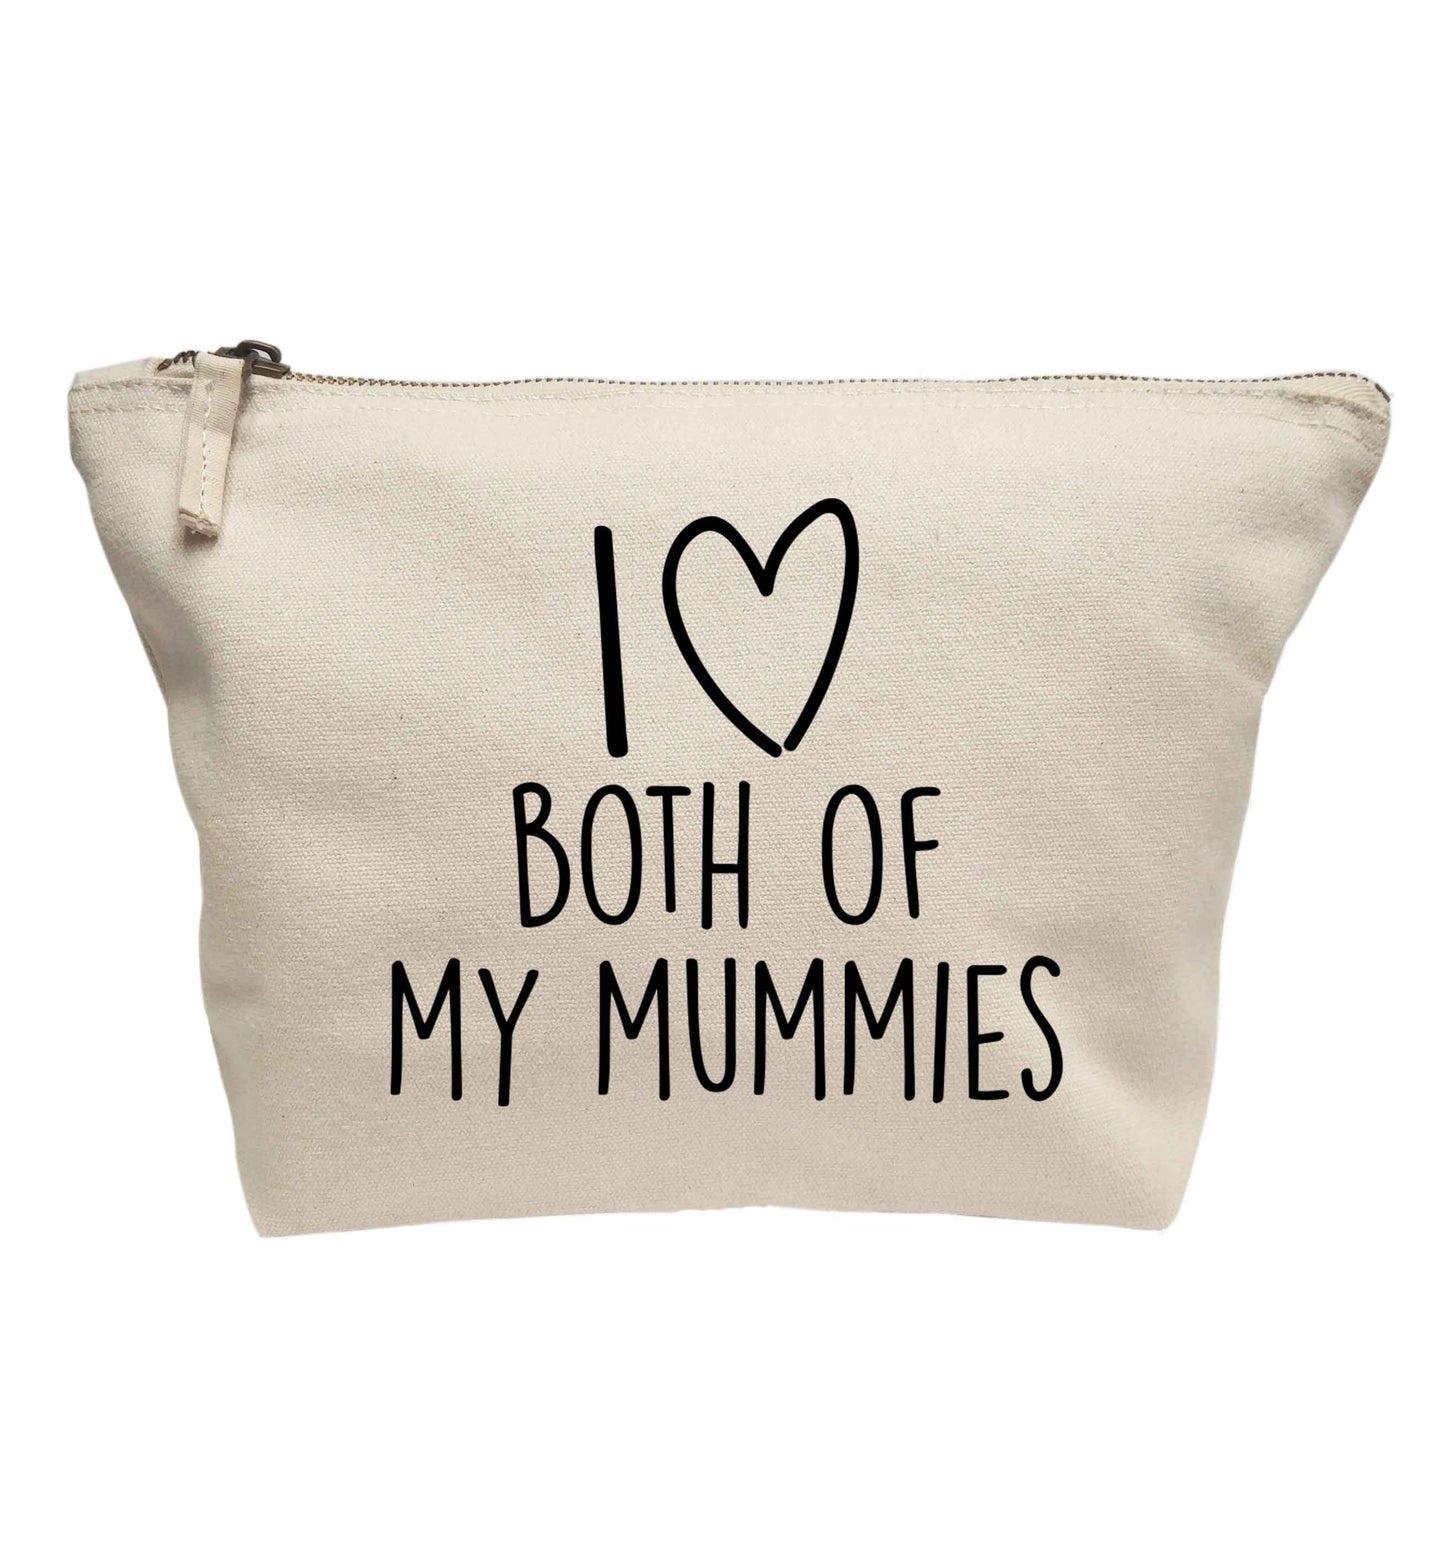 I love both of my mummies | Makeup / wash bag